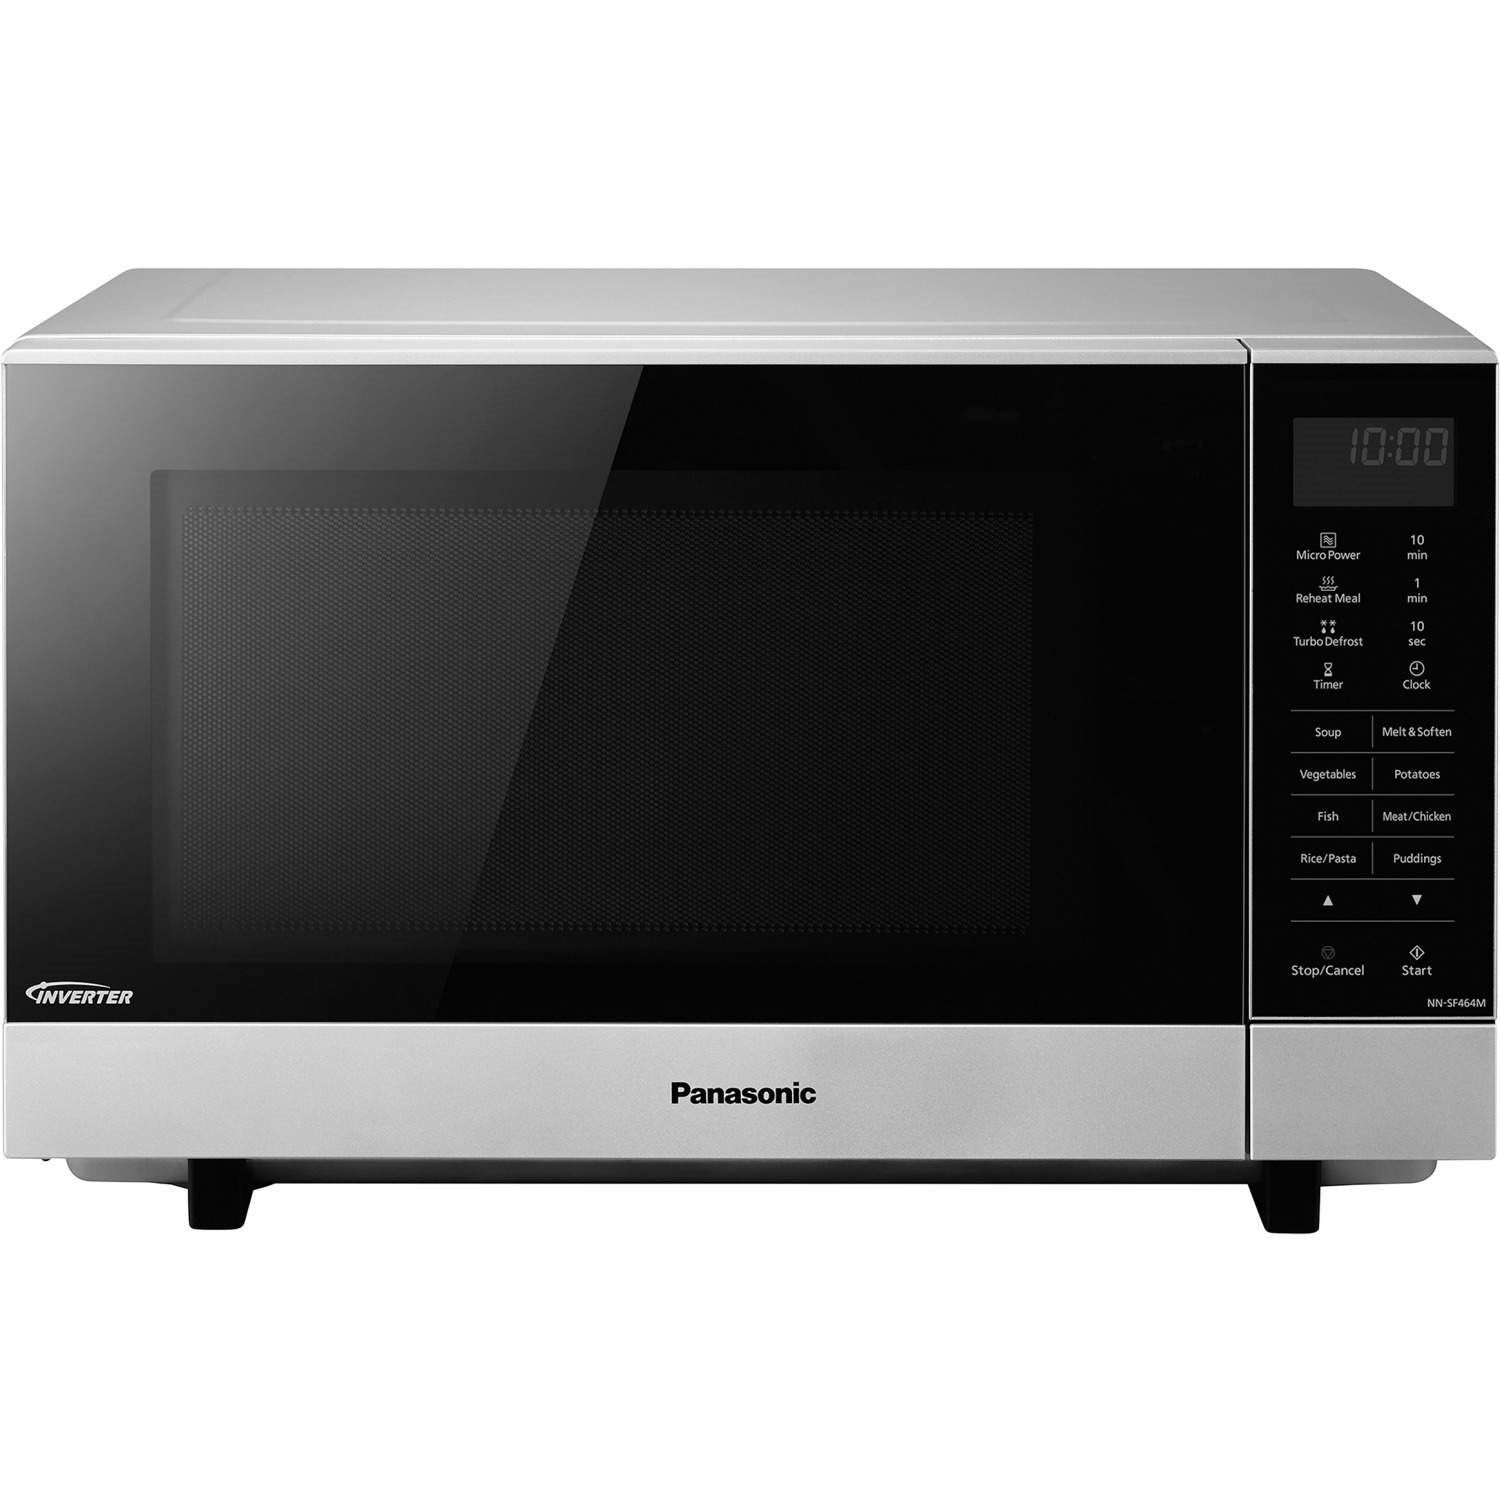 Panasonic 27L Digital Microwave Oven - Silver